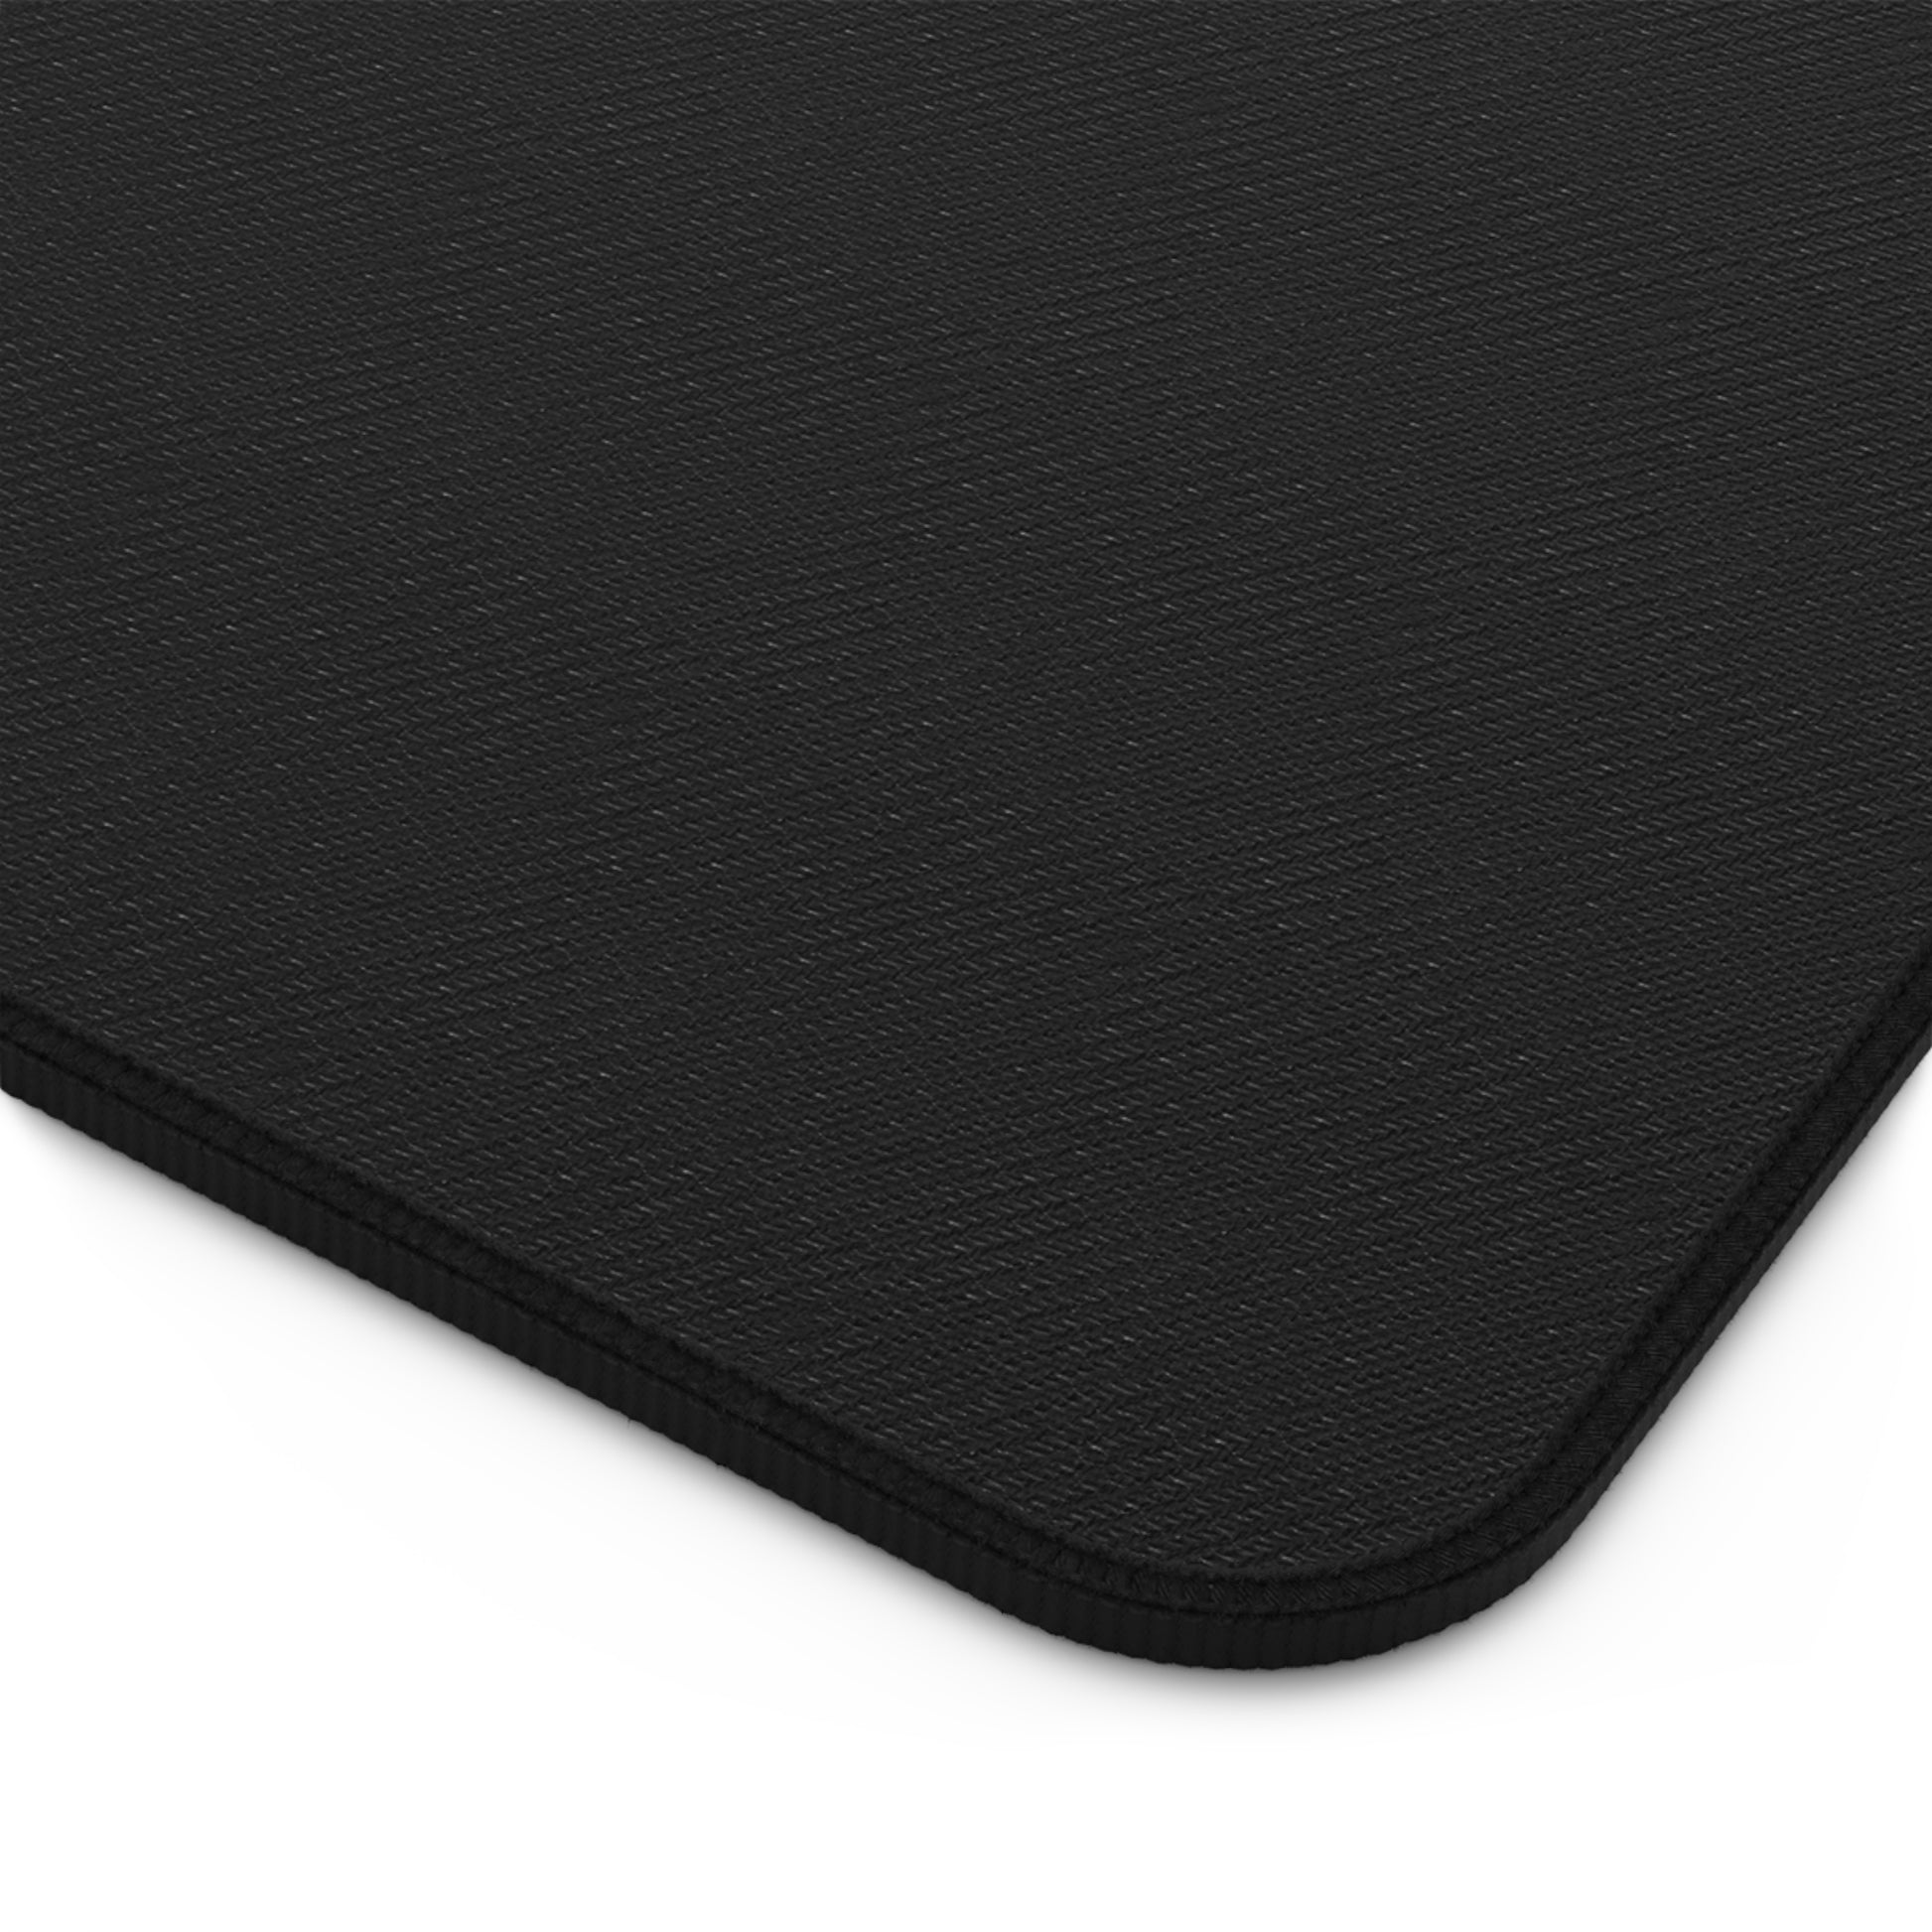 The black rubber bottom of a pink and blue kaleidoscope desk mat.